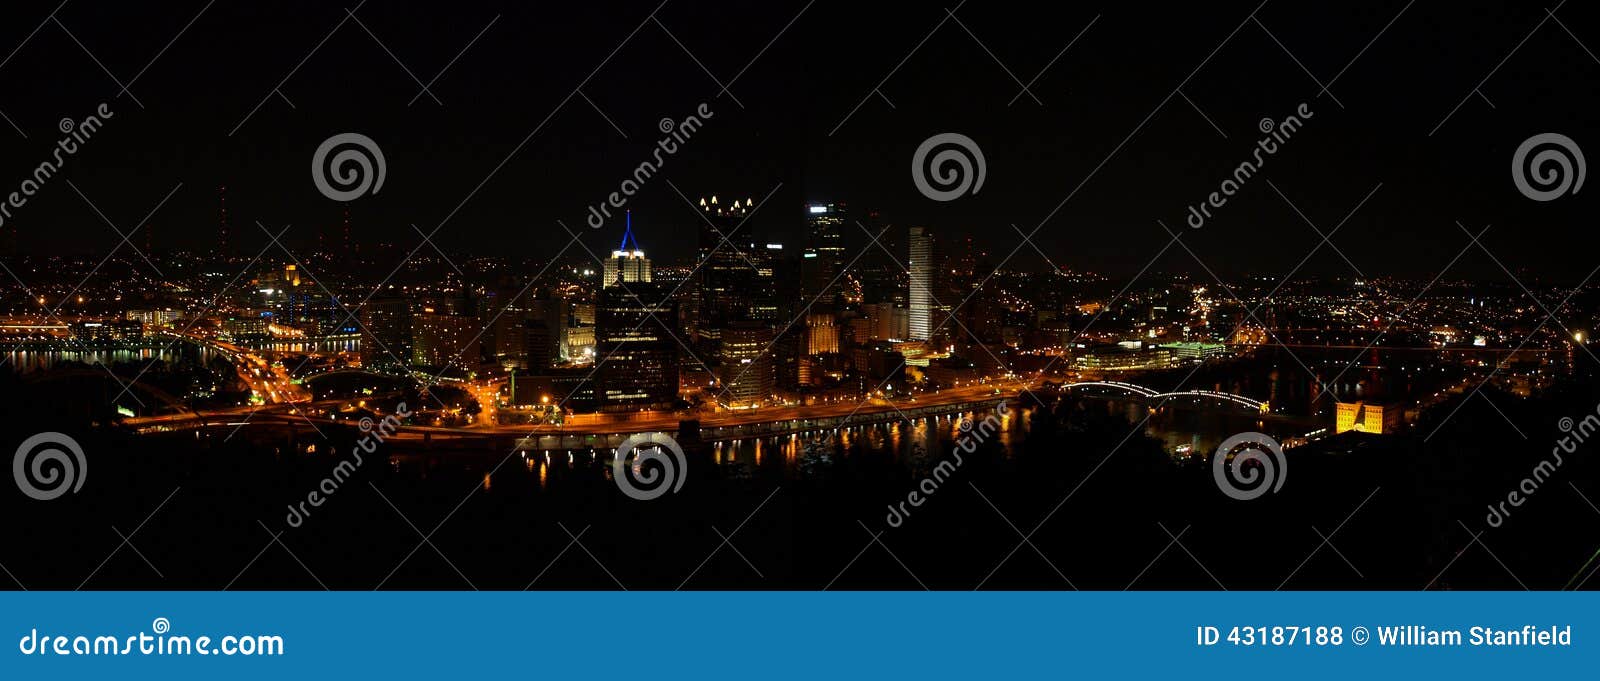 Pittsburgh, PA Night Skyline. Night skyline of Pittsburgh taken from across the river on Mt. Washington.